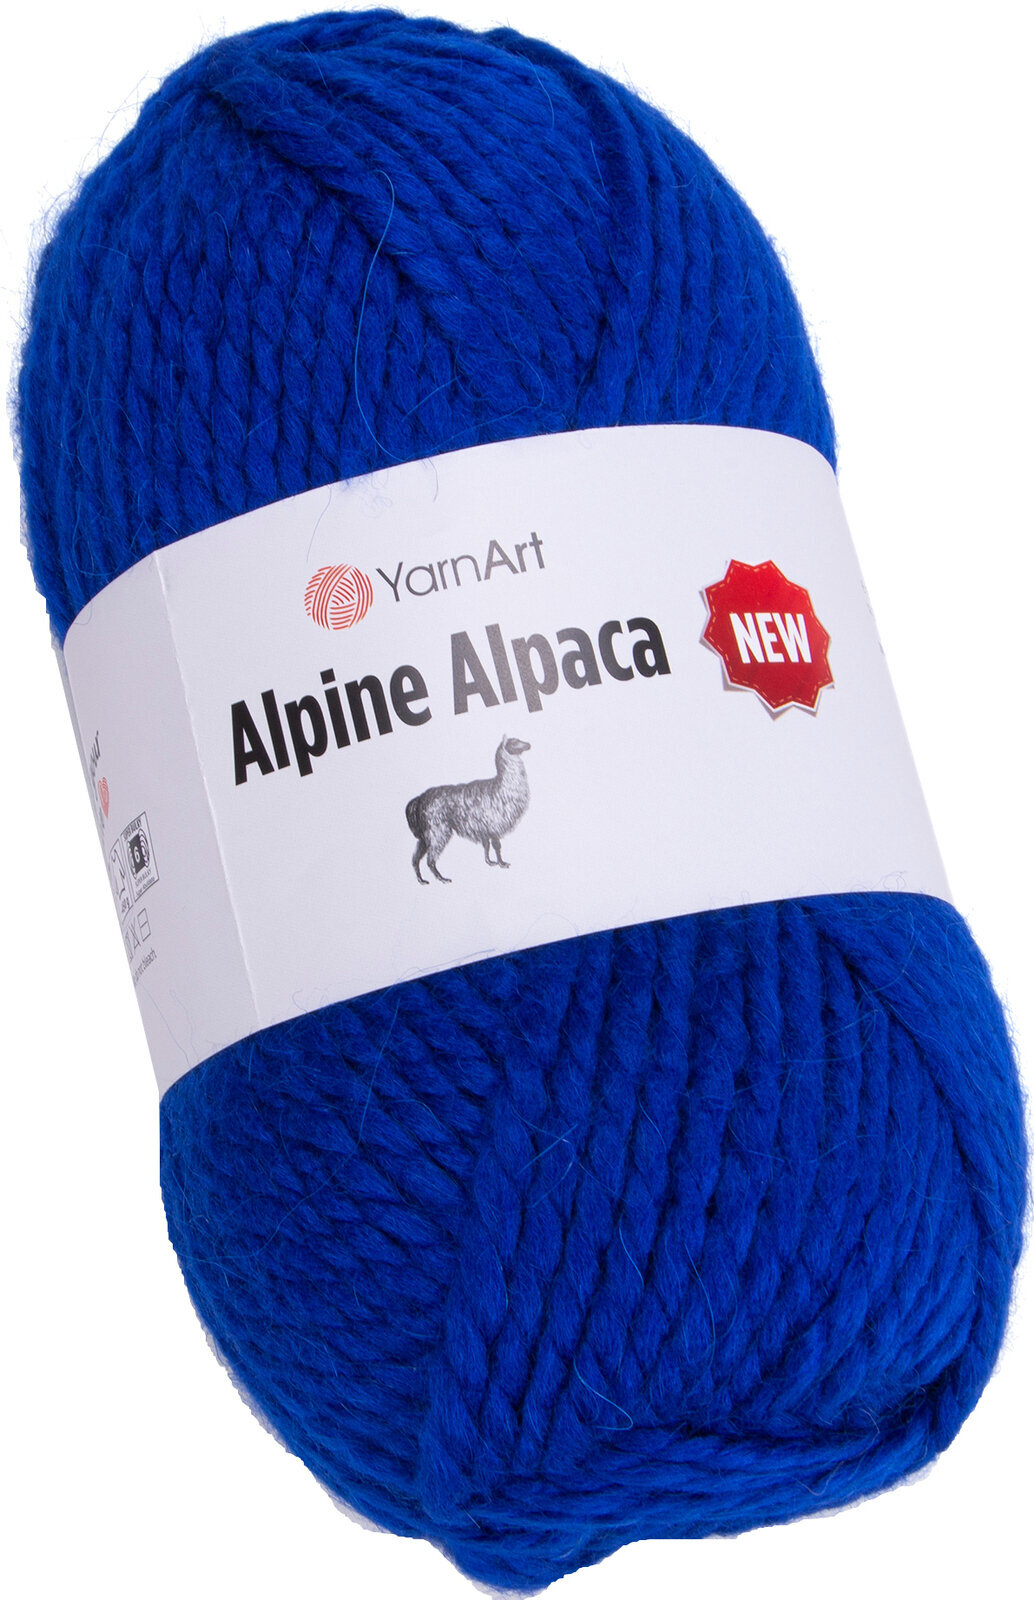 Stickgarn Yarn Art Alpine Alpaca New 1442